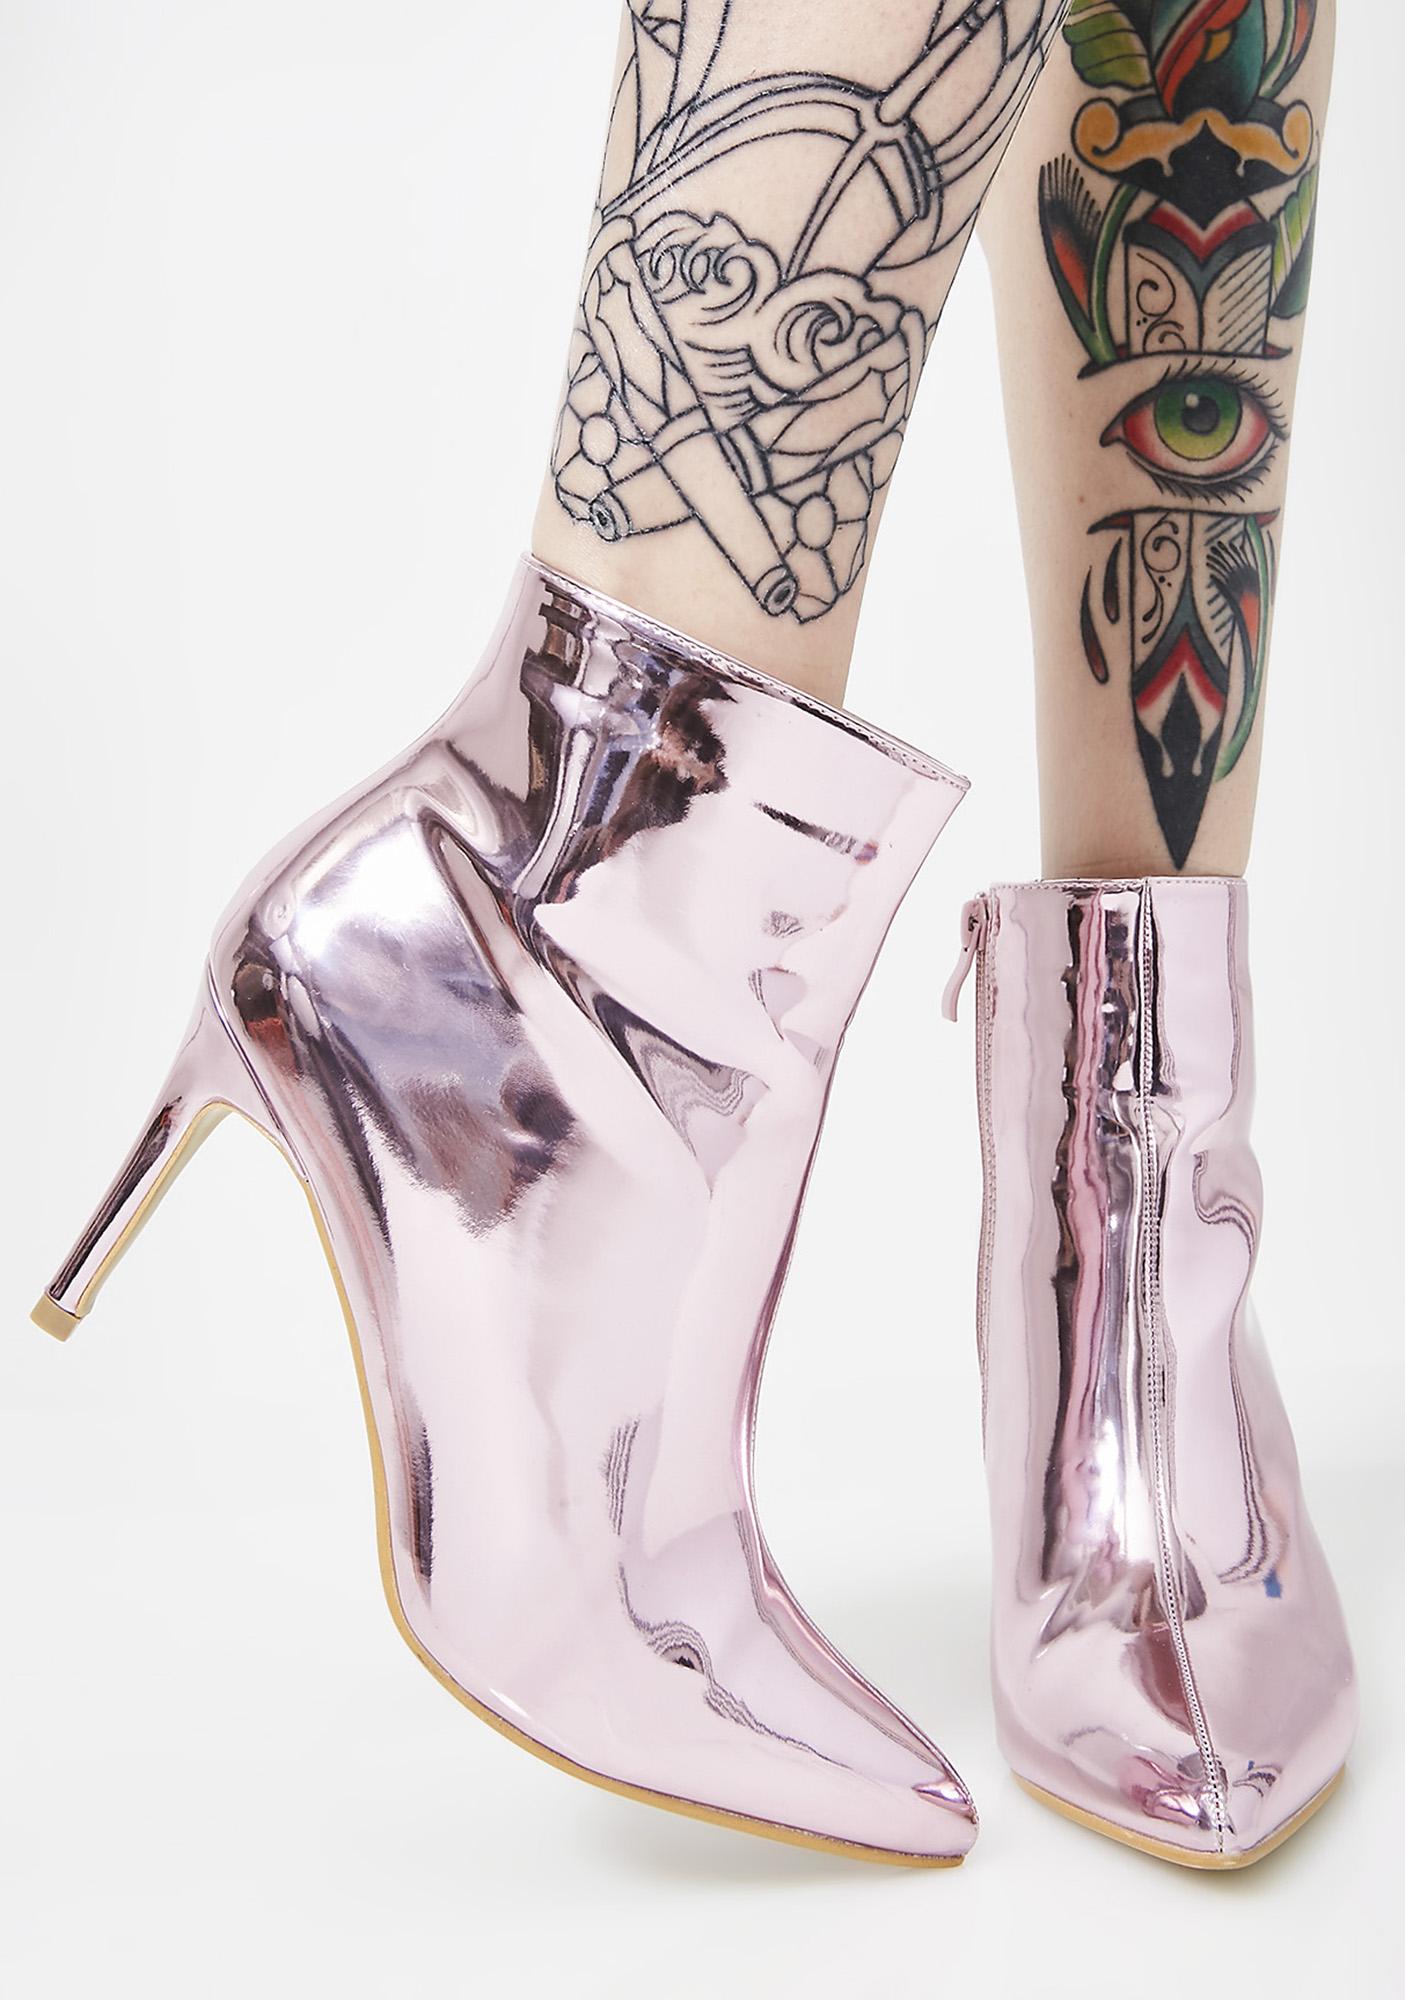 metallic pink booties